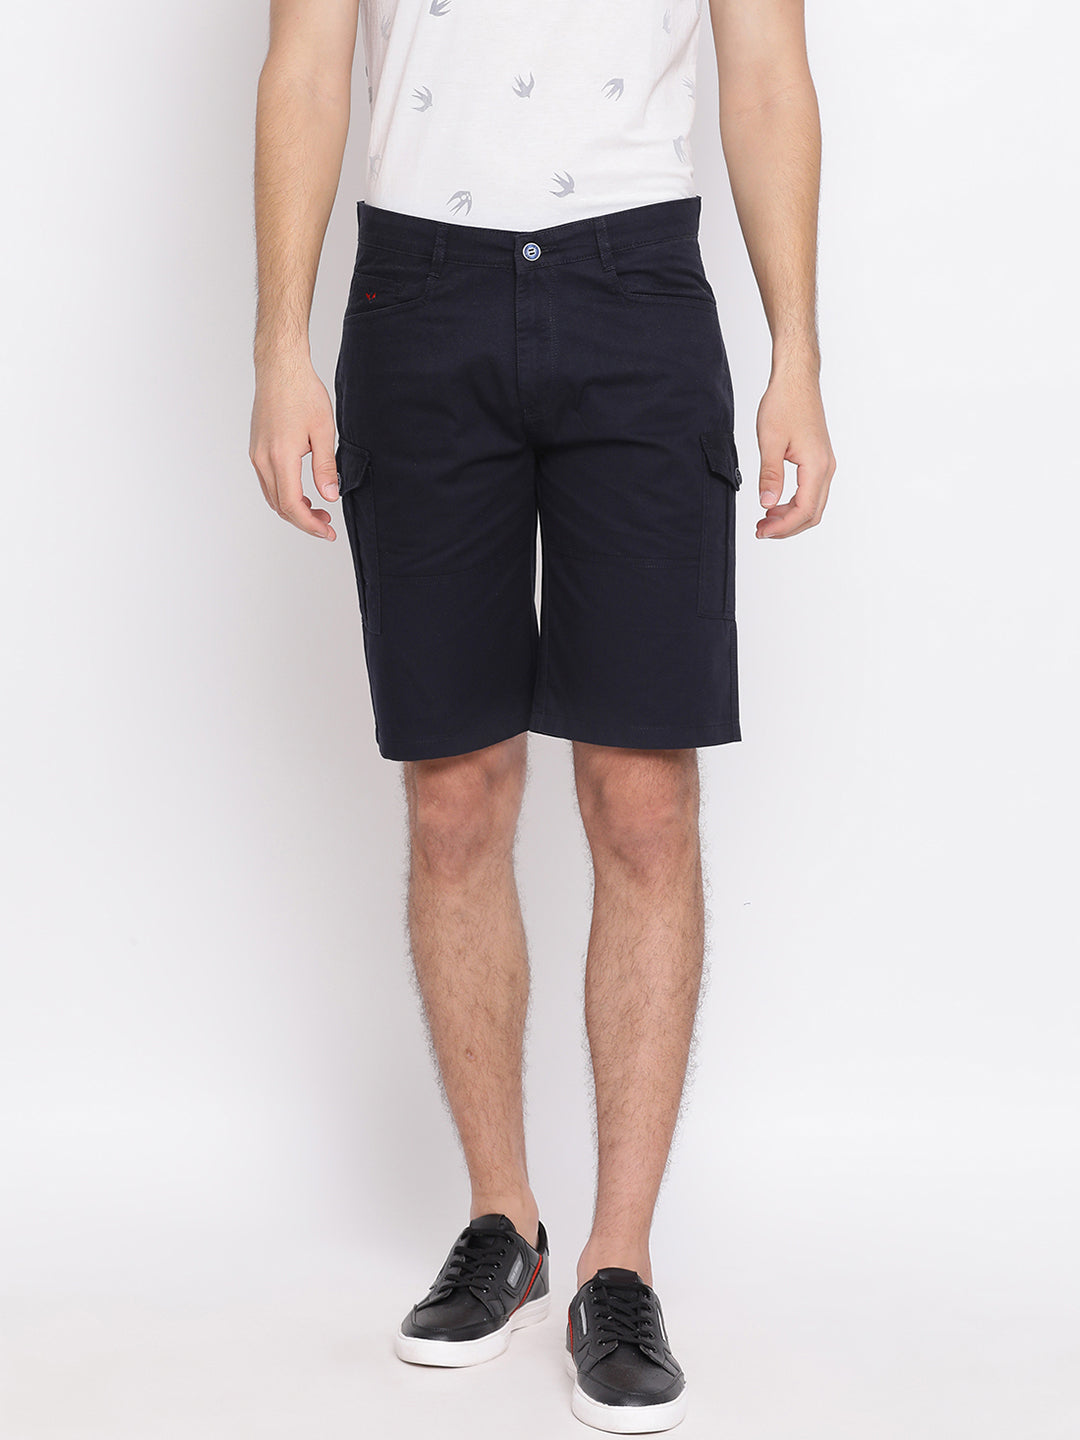 Navy Blue Shorts - Men Shorts